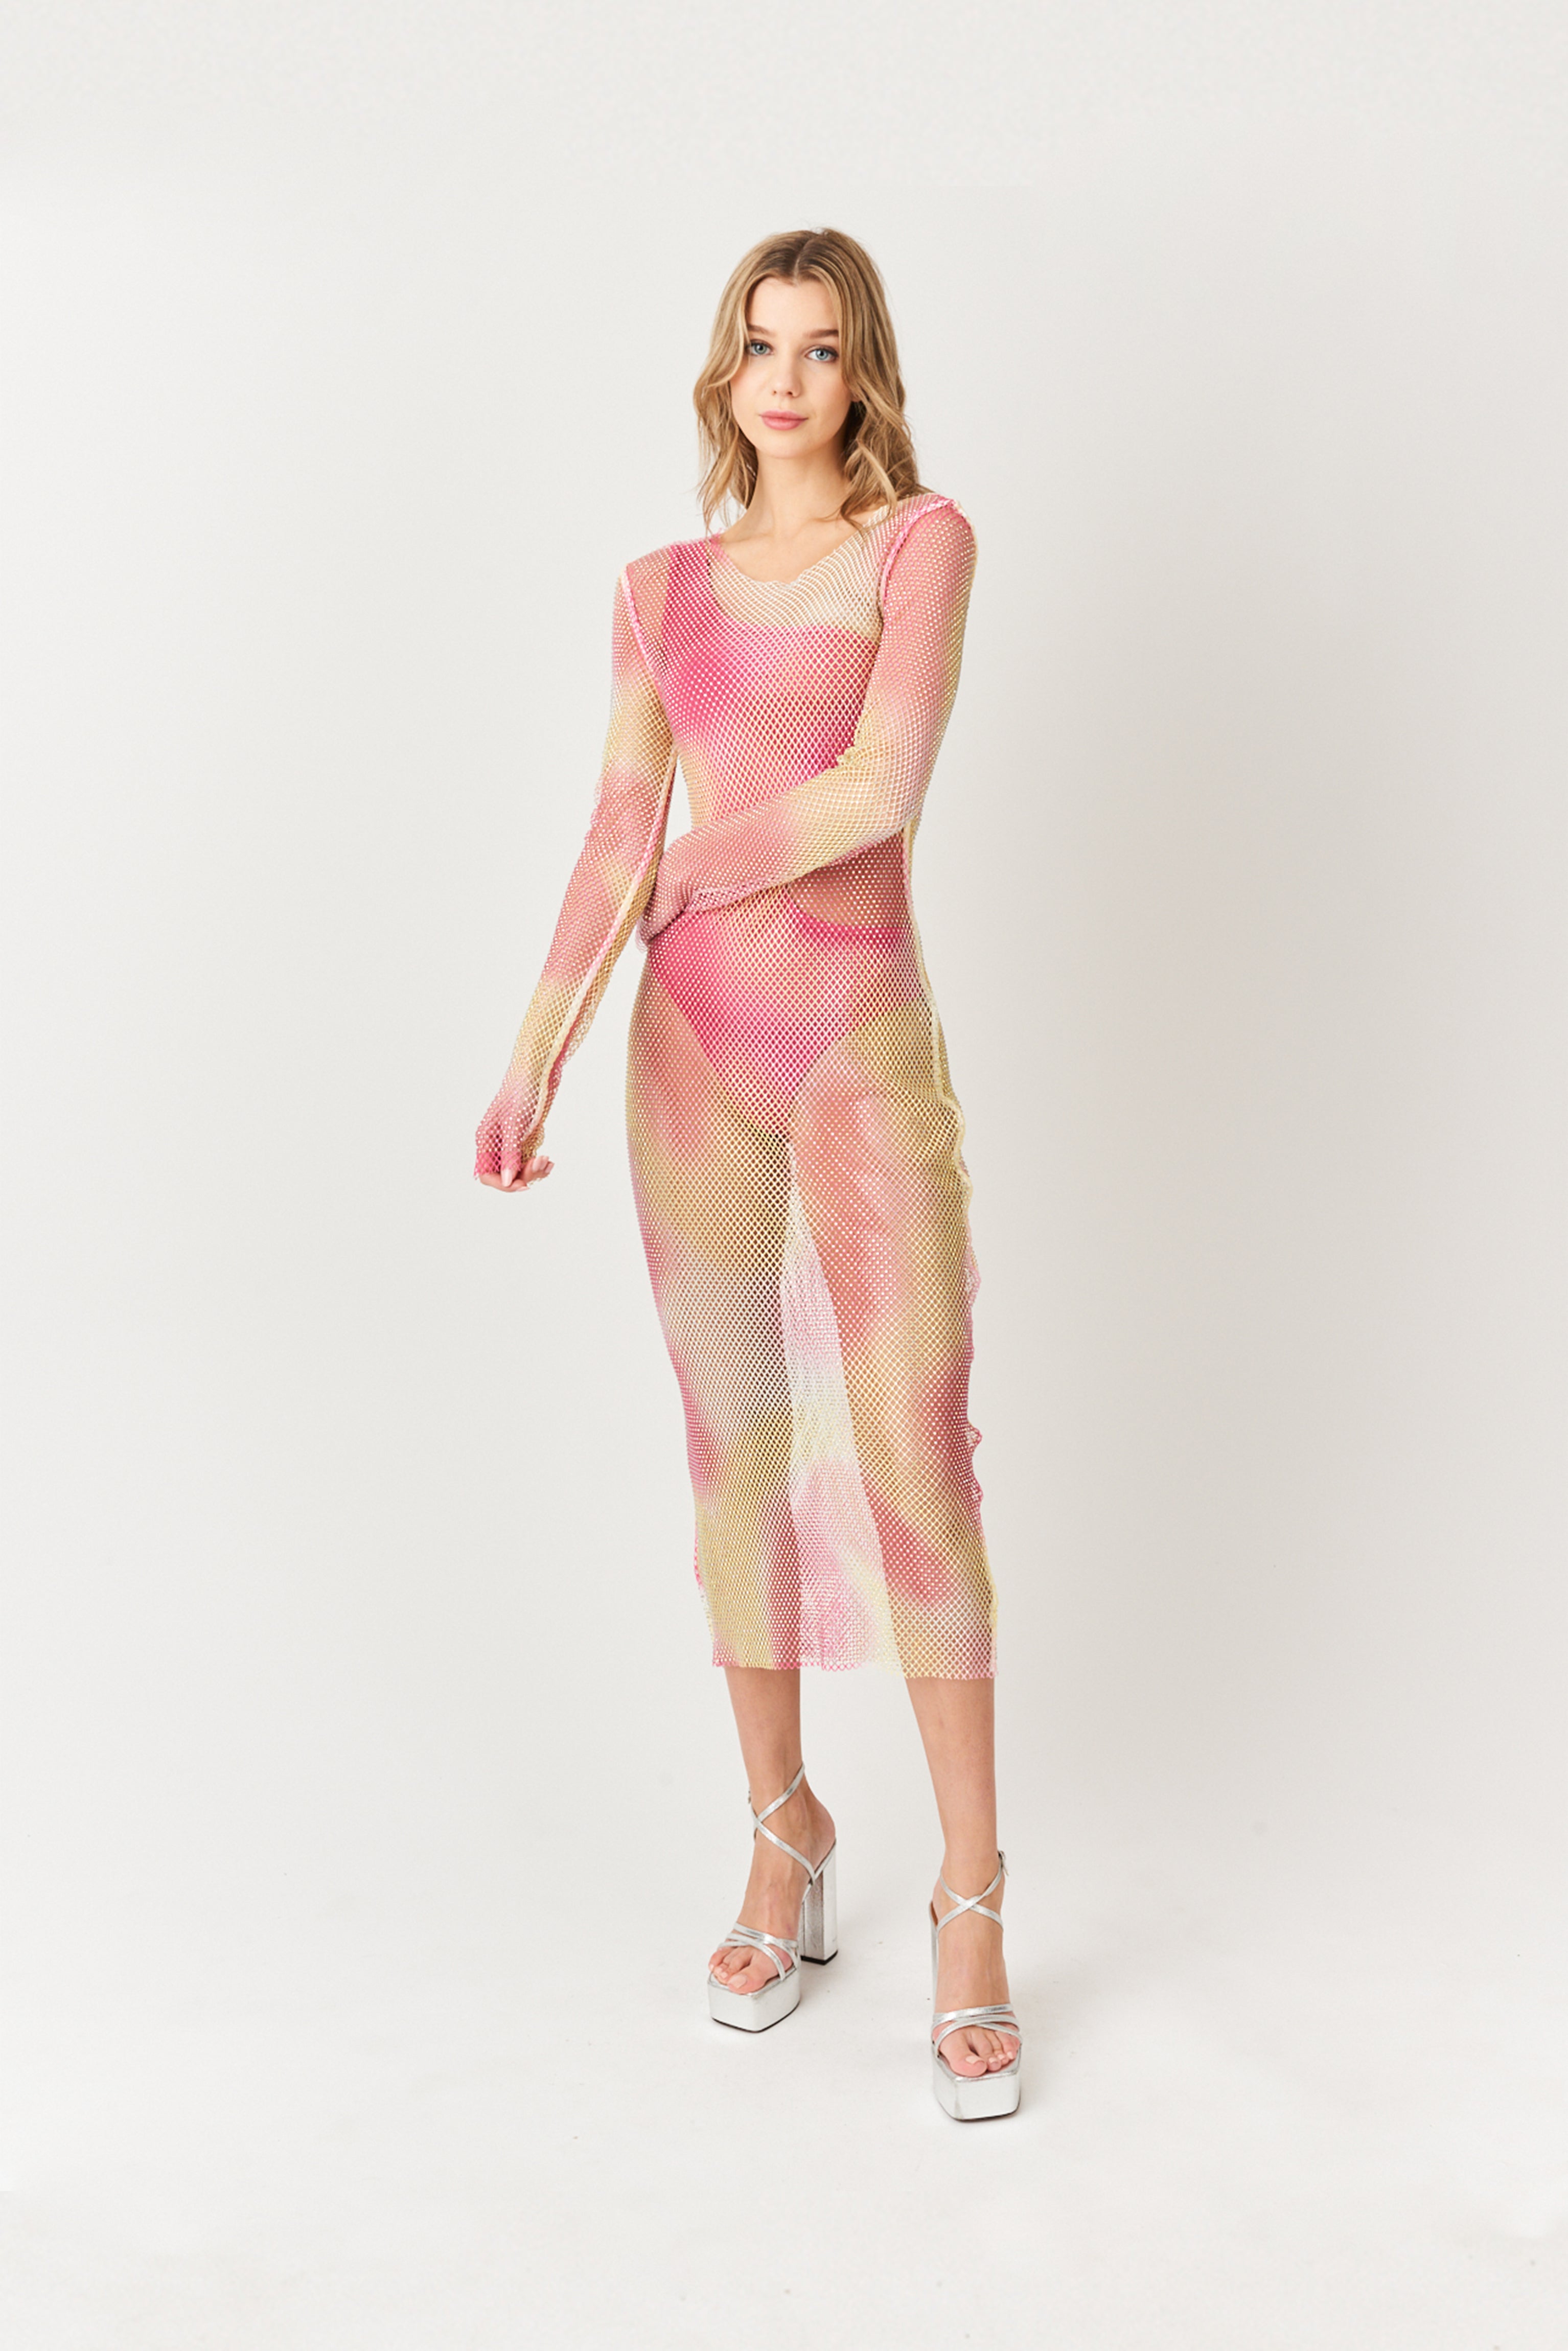 Dorit Pink and Yellow Sheer Fish Net Mesh Maxi Dress with Dip Dye Rhinestones